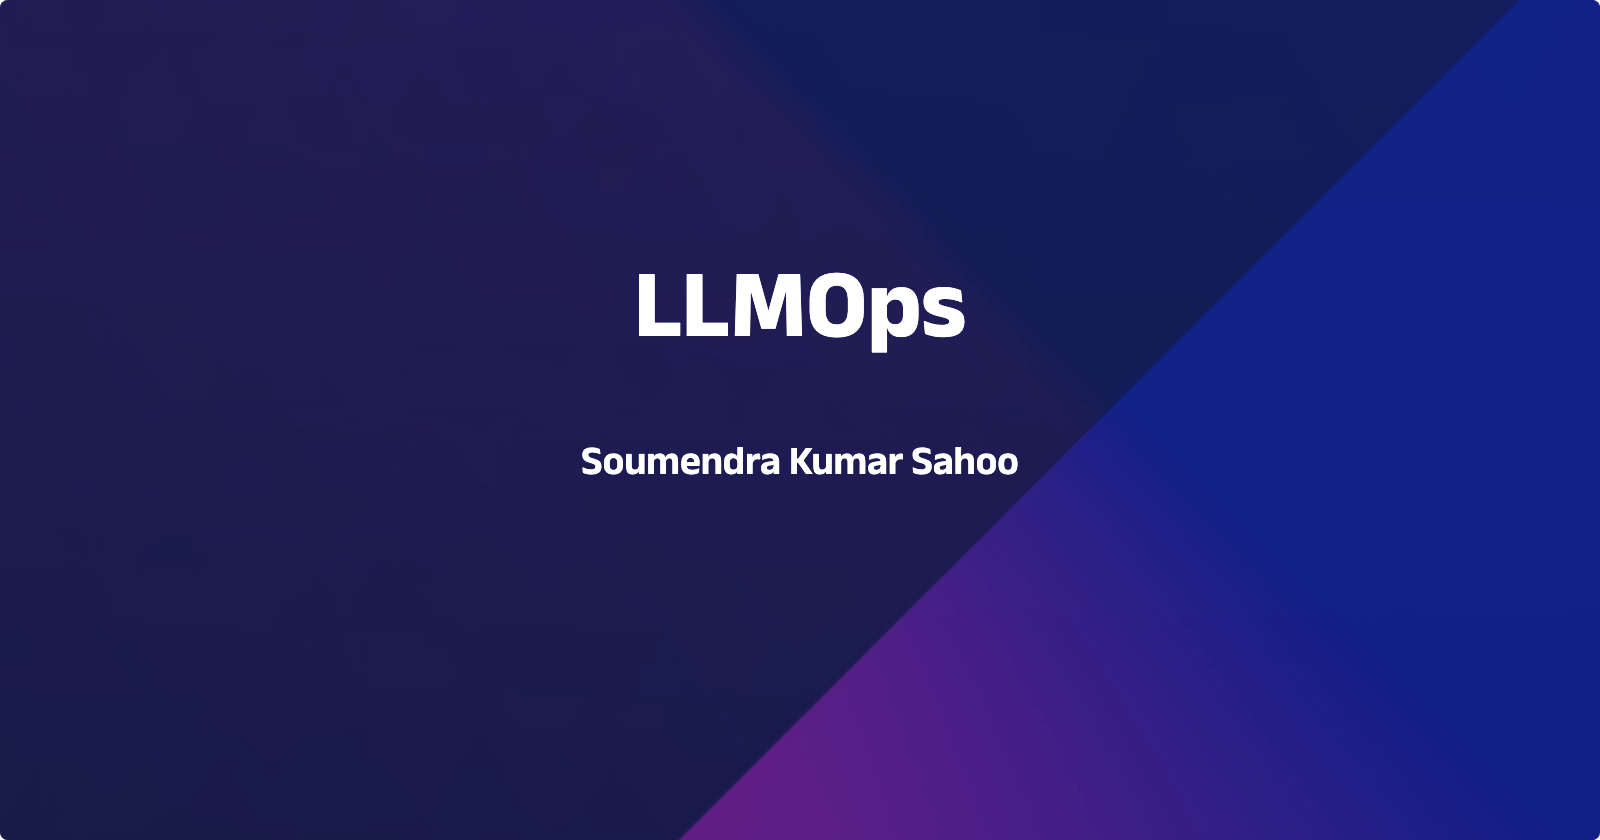 LLMOps: Introduction